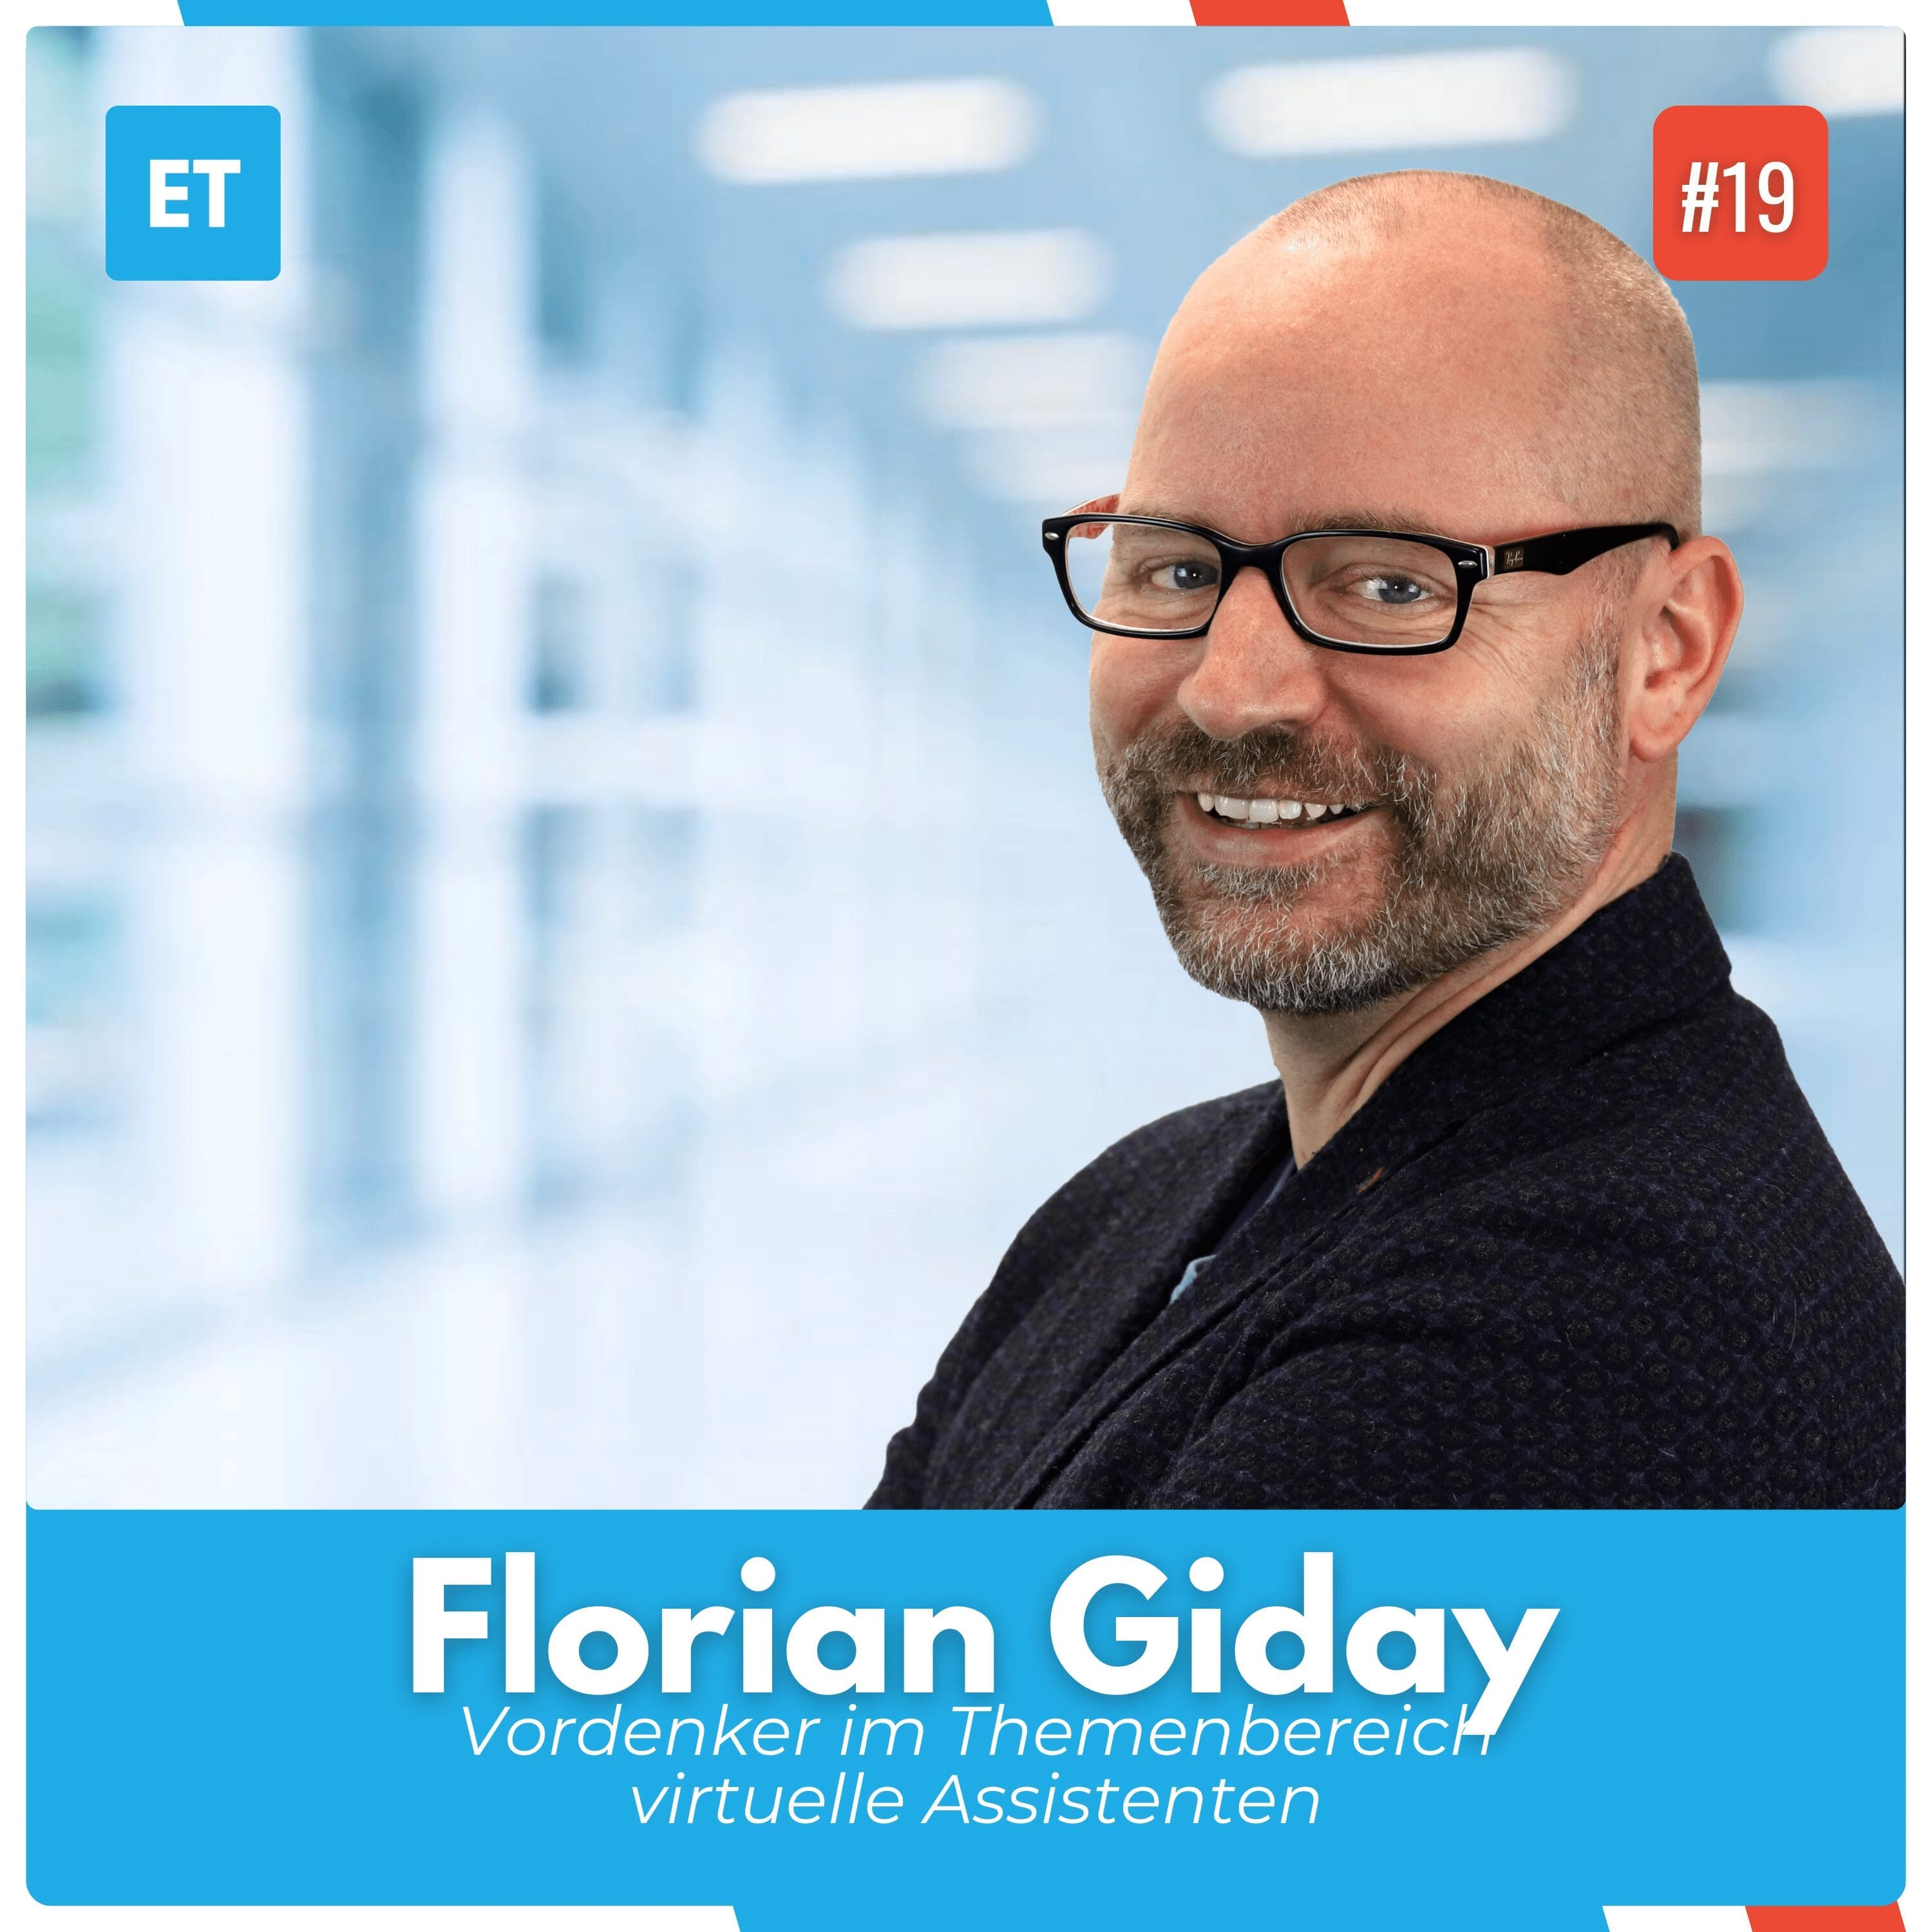 Florian Giday ist zu Gast im Exciting Tech Podcast